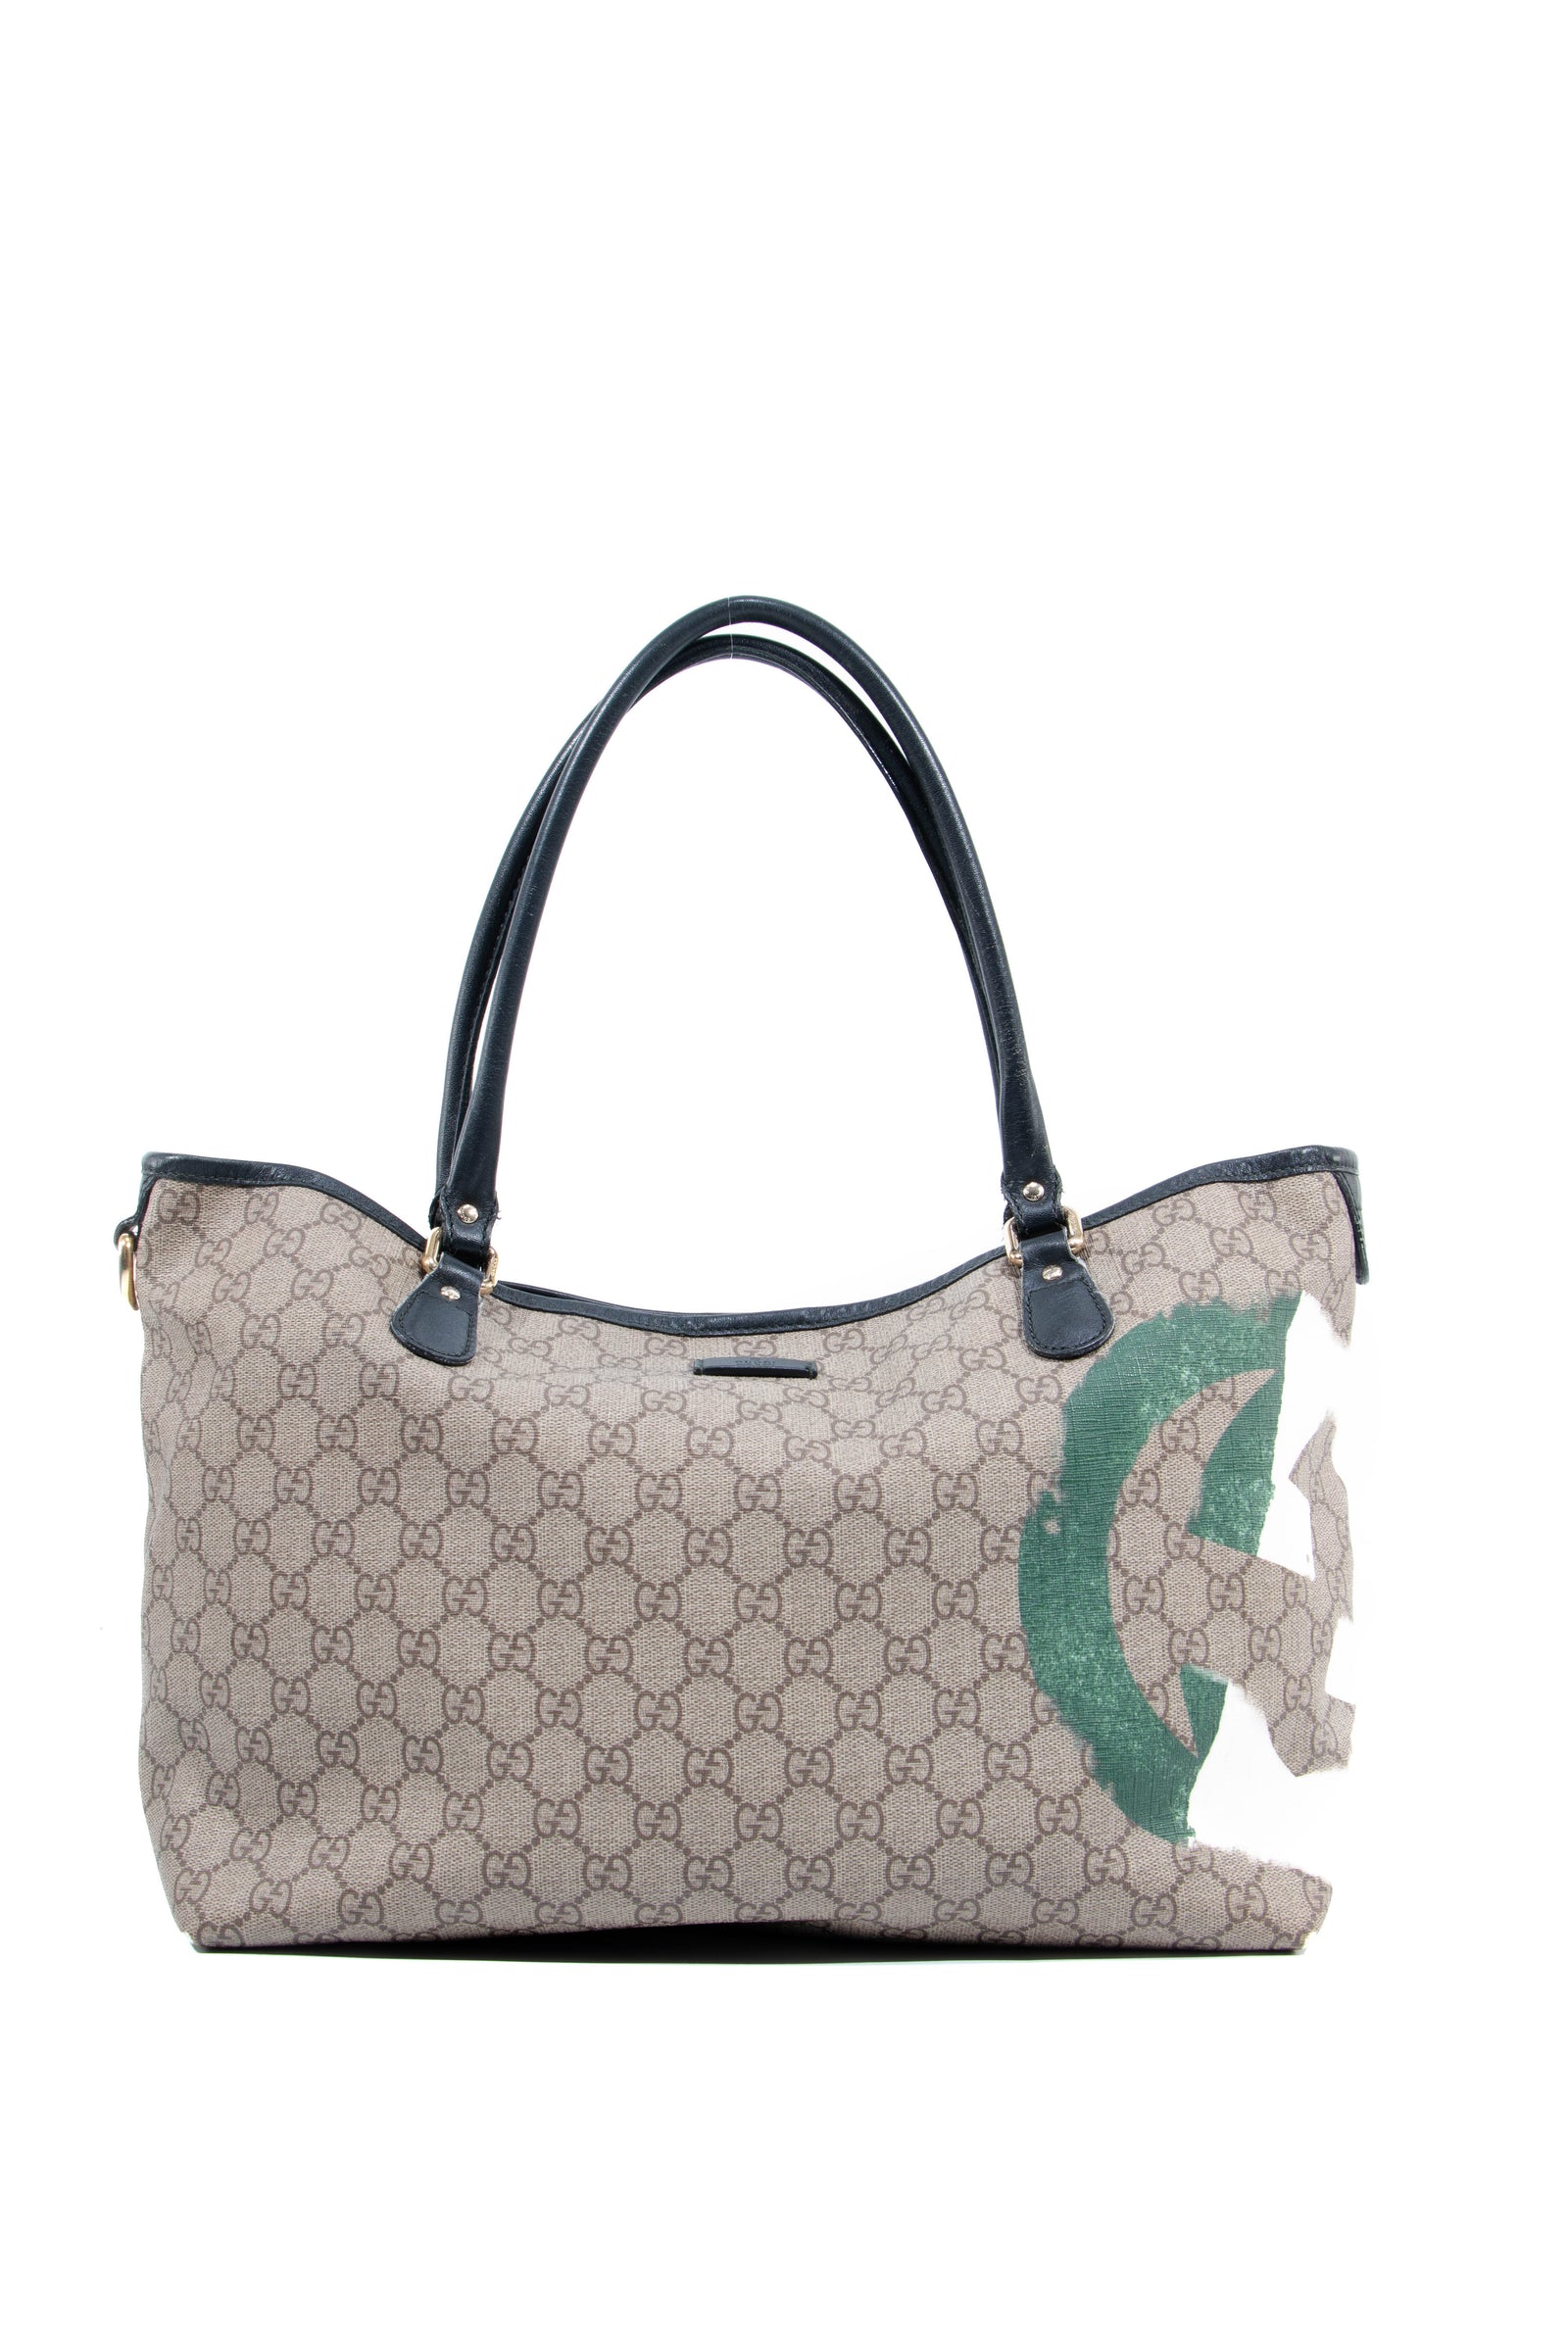 Gucci Dionysus Shoulder Bag - Small - One Savvy Design Luxury